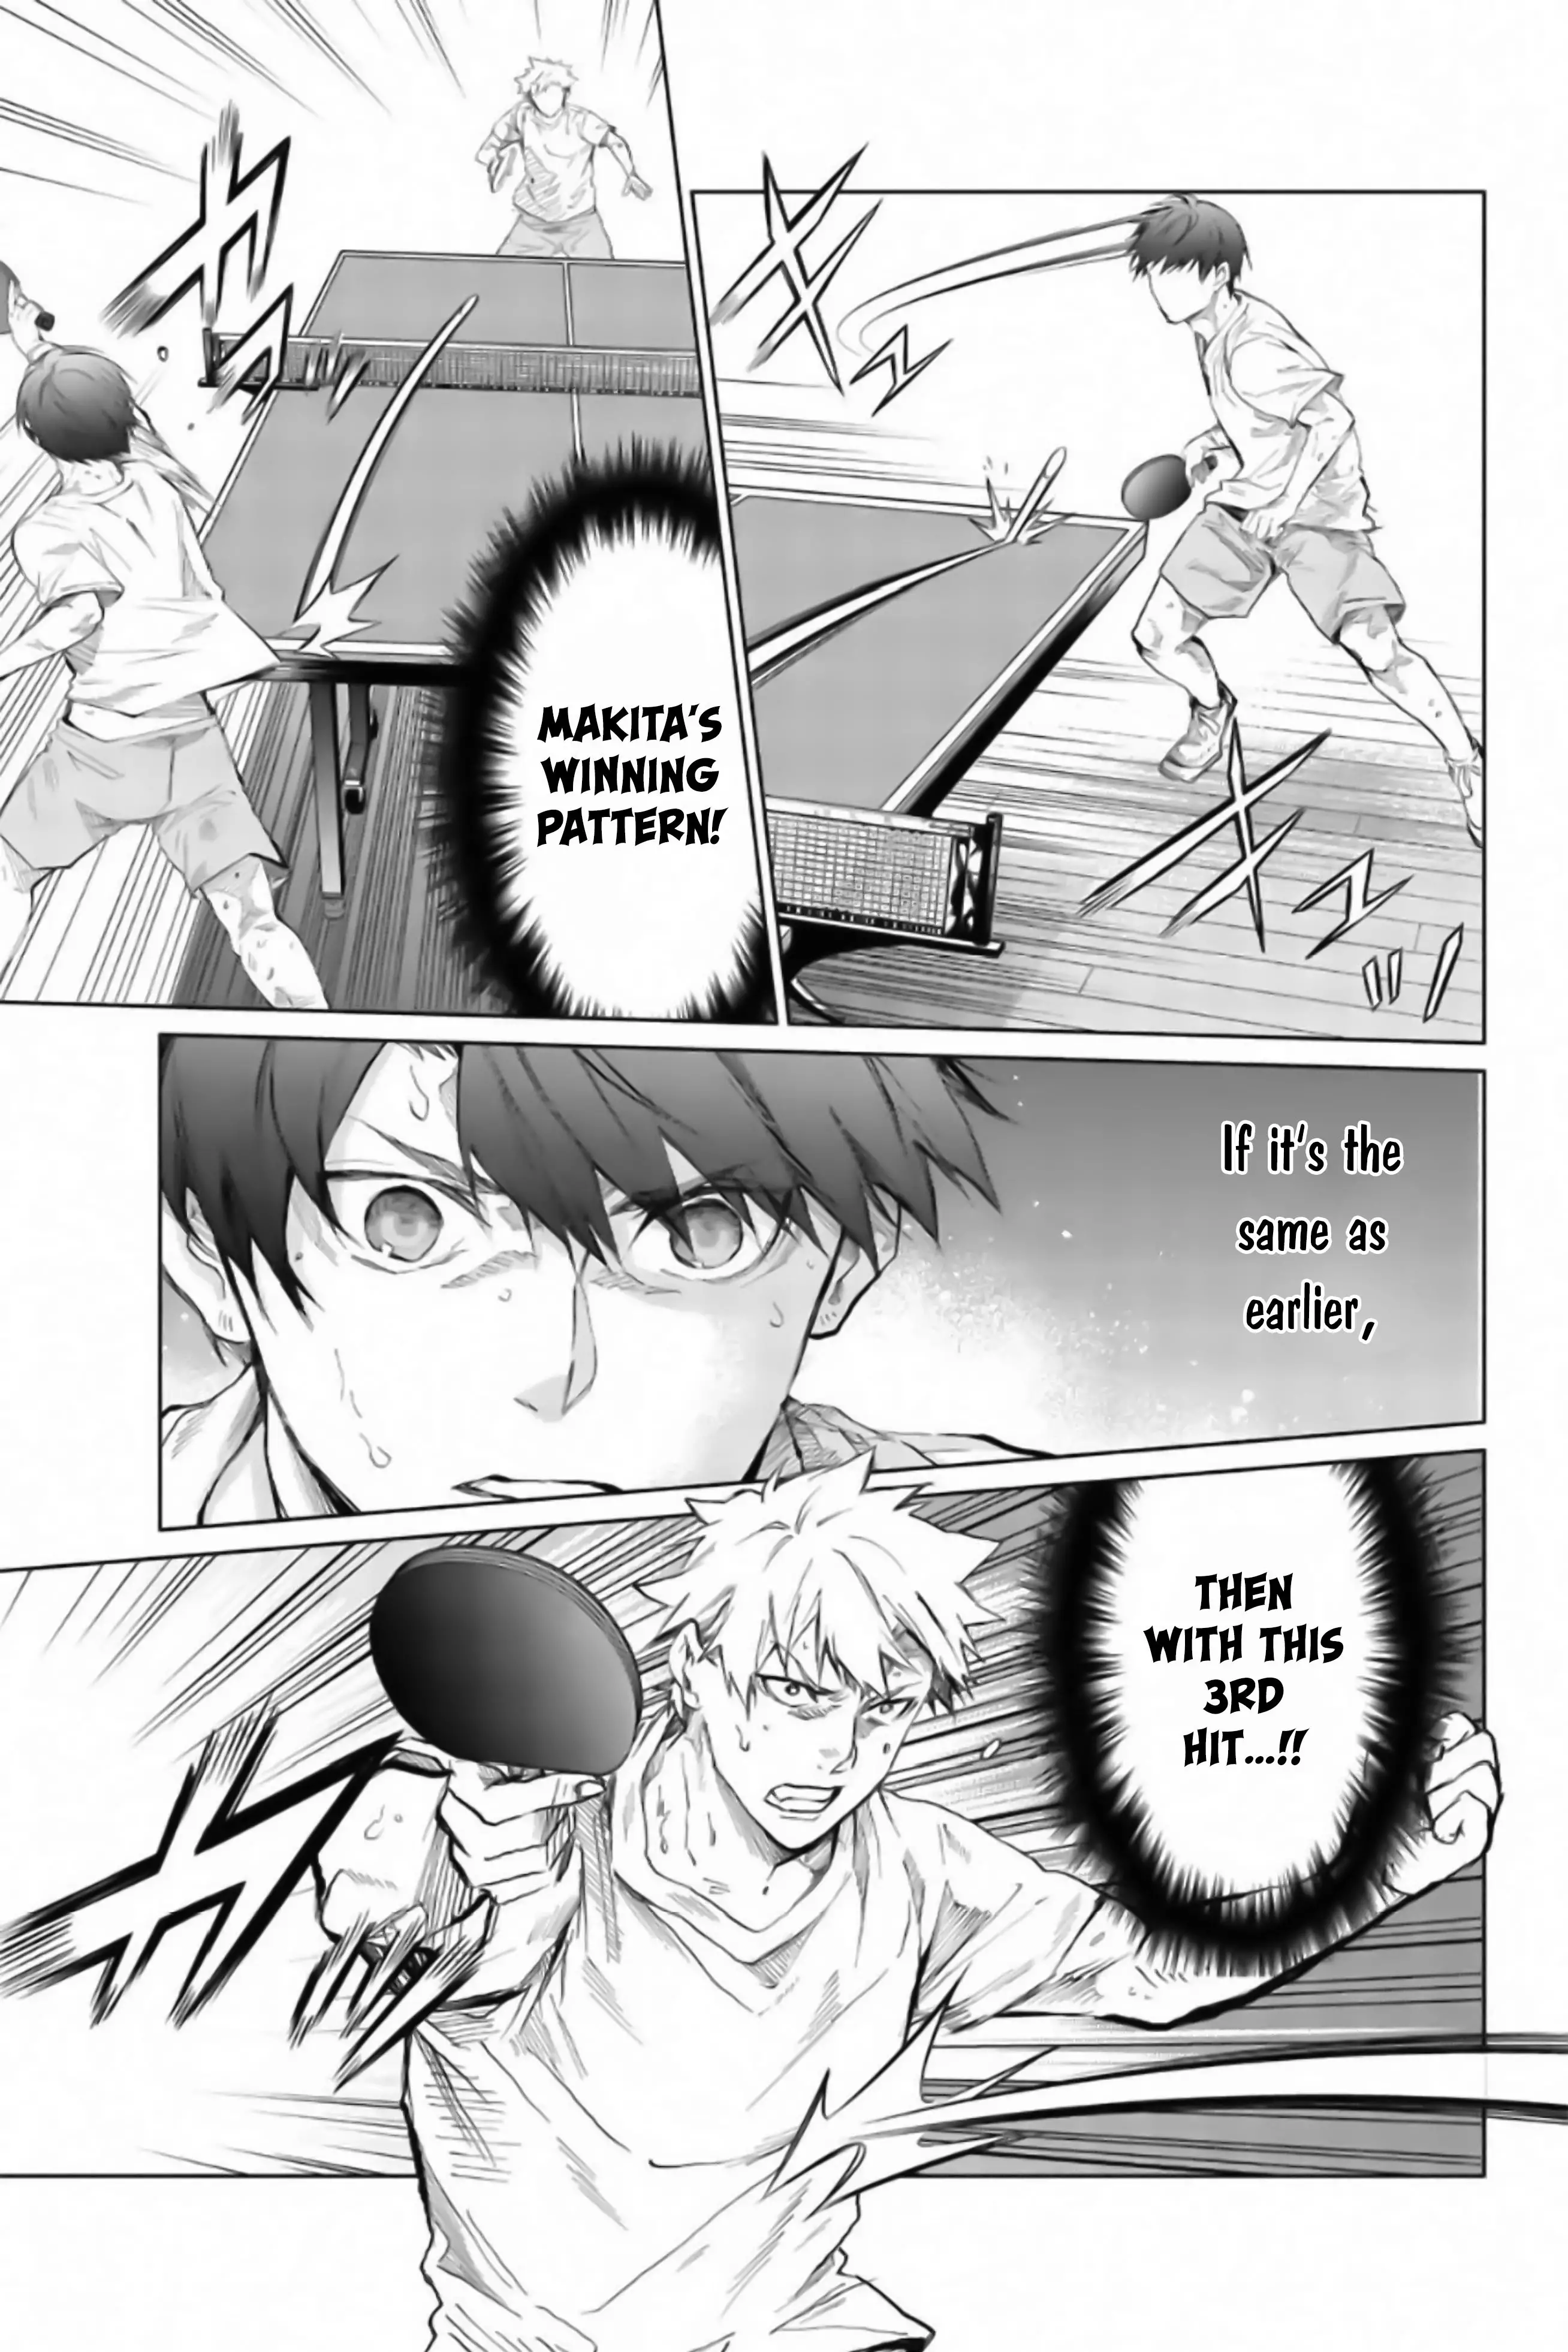 Read Aoiro Ping Pong 11 - Oni Scan